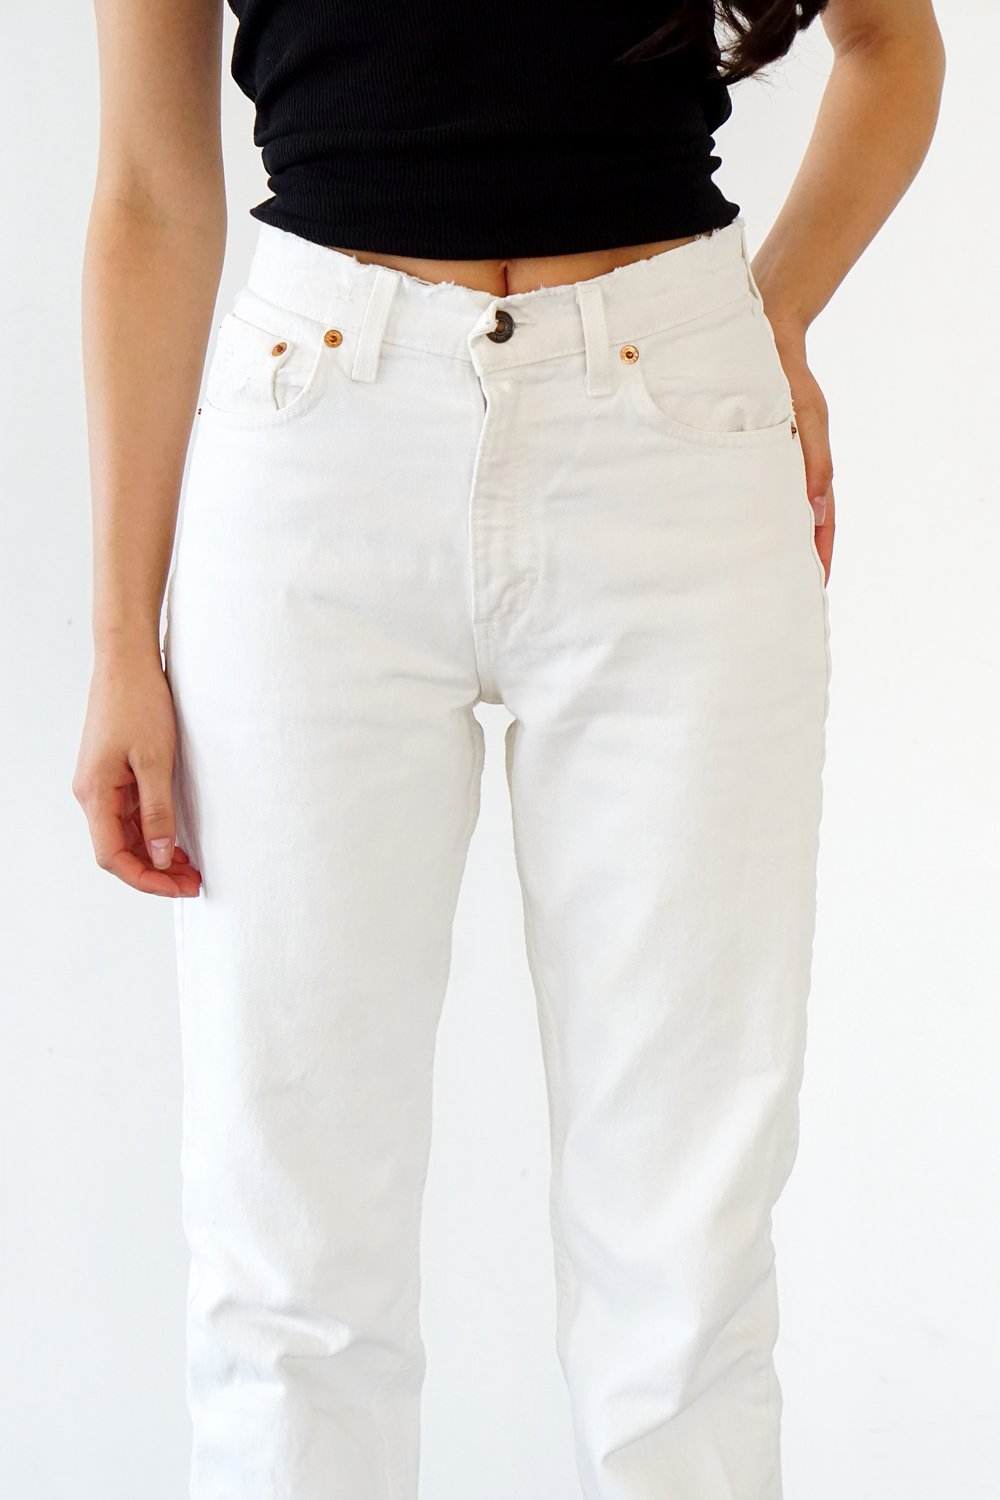 White Levi's Denim Jeans SZ 25 — Valley